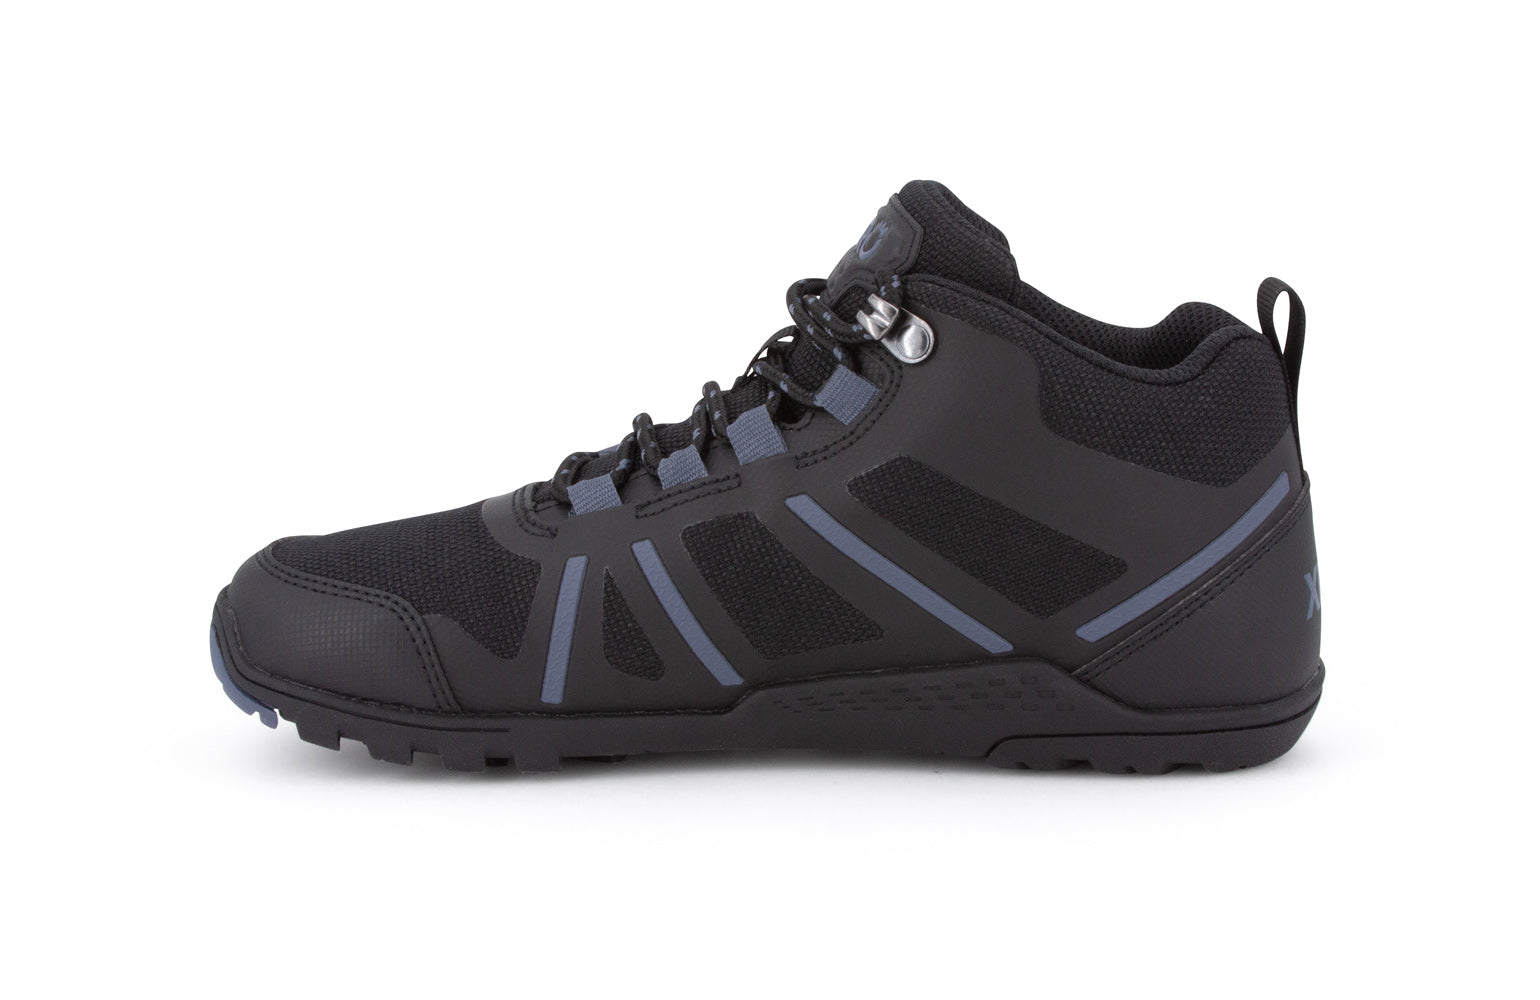 Xero Shoes Daylite Hiker Fusion Womens barfods vandrestøvler til kvinder i farven black, inderside